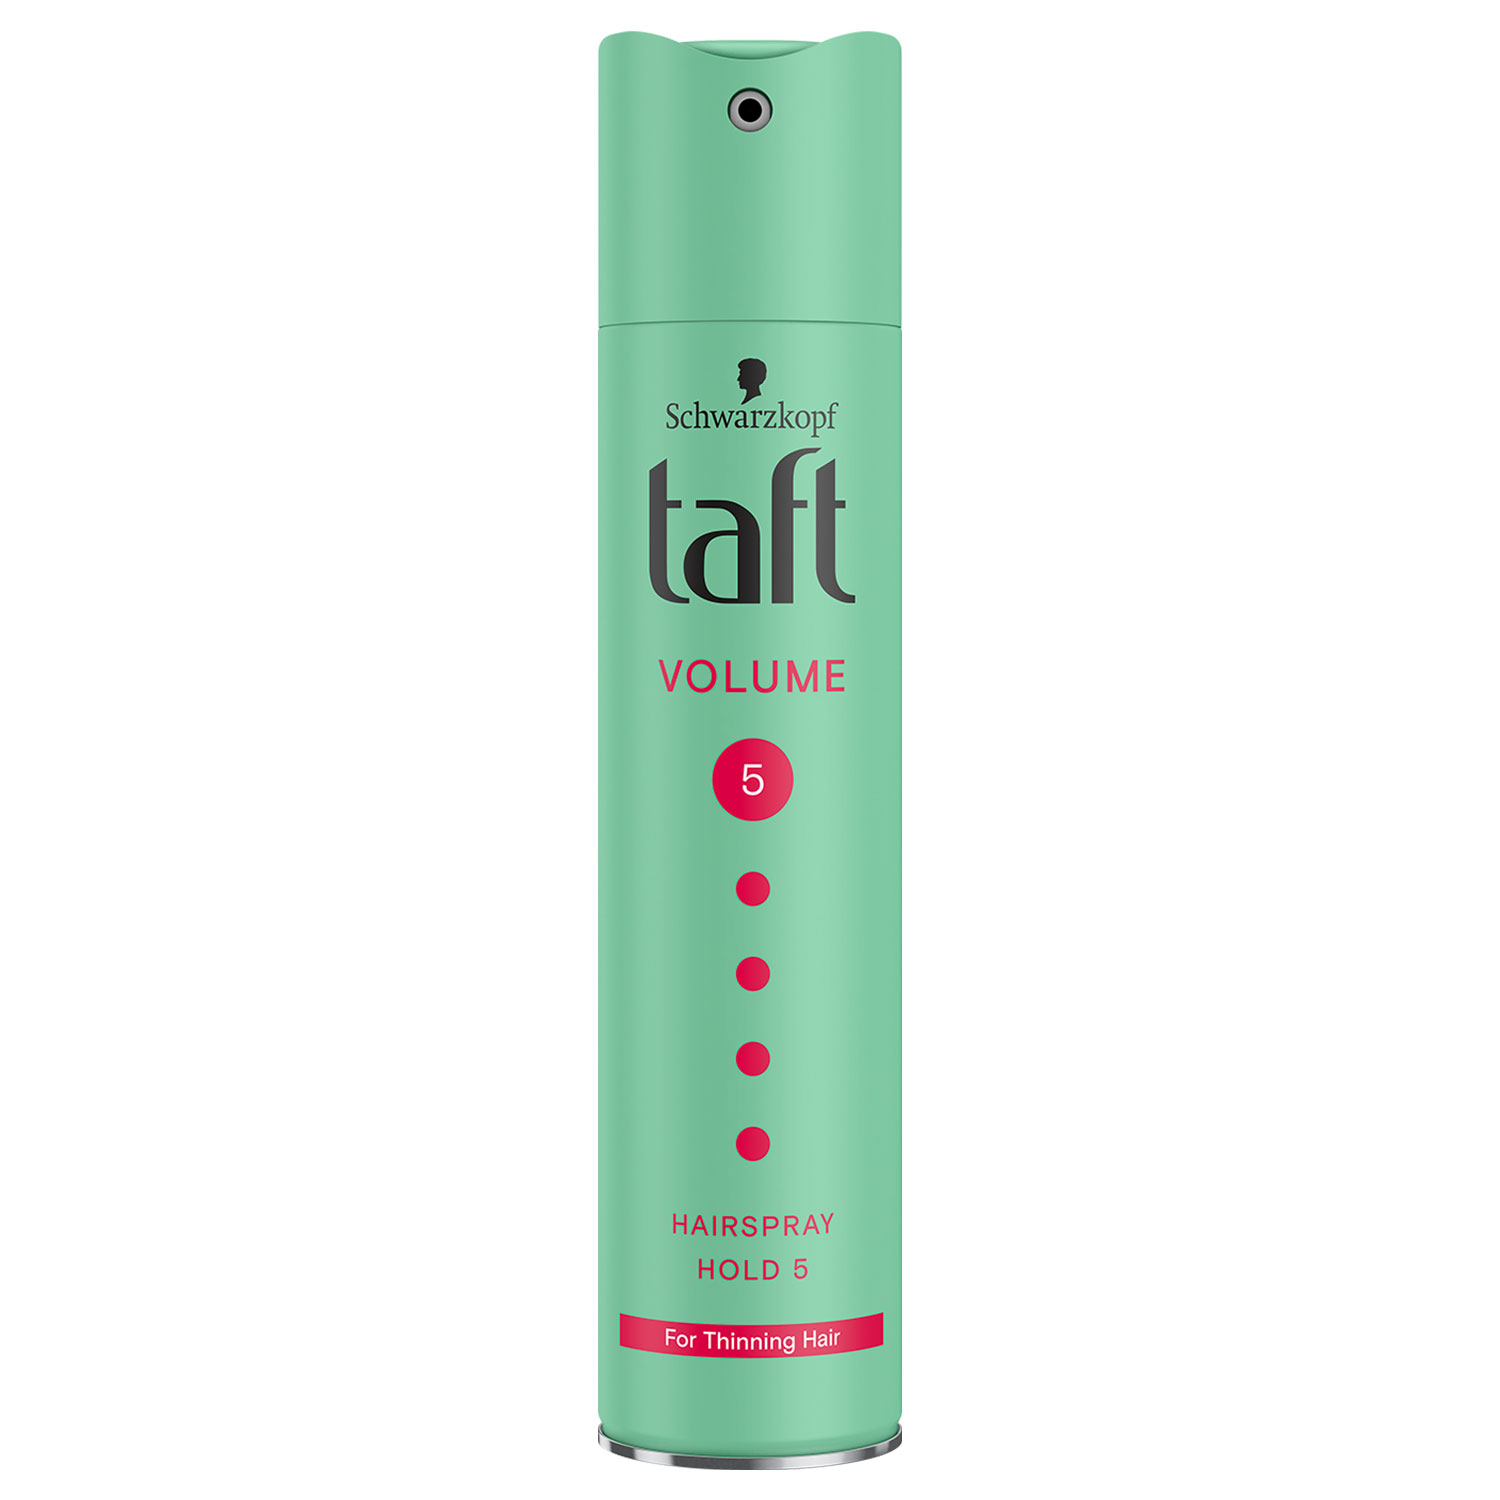 Hairspray Taft Volume 5 250ml